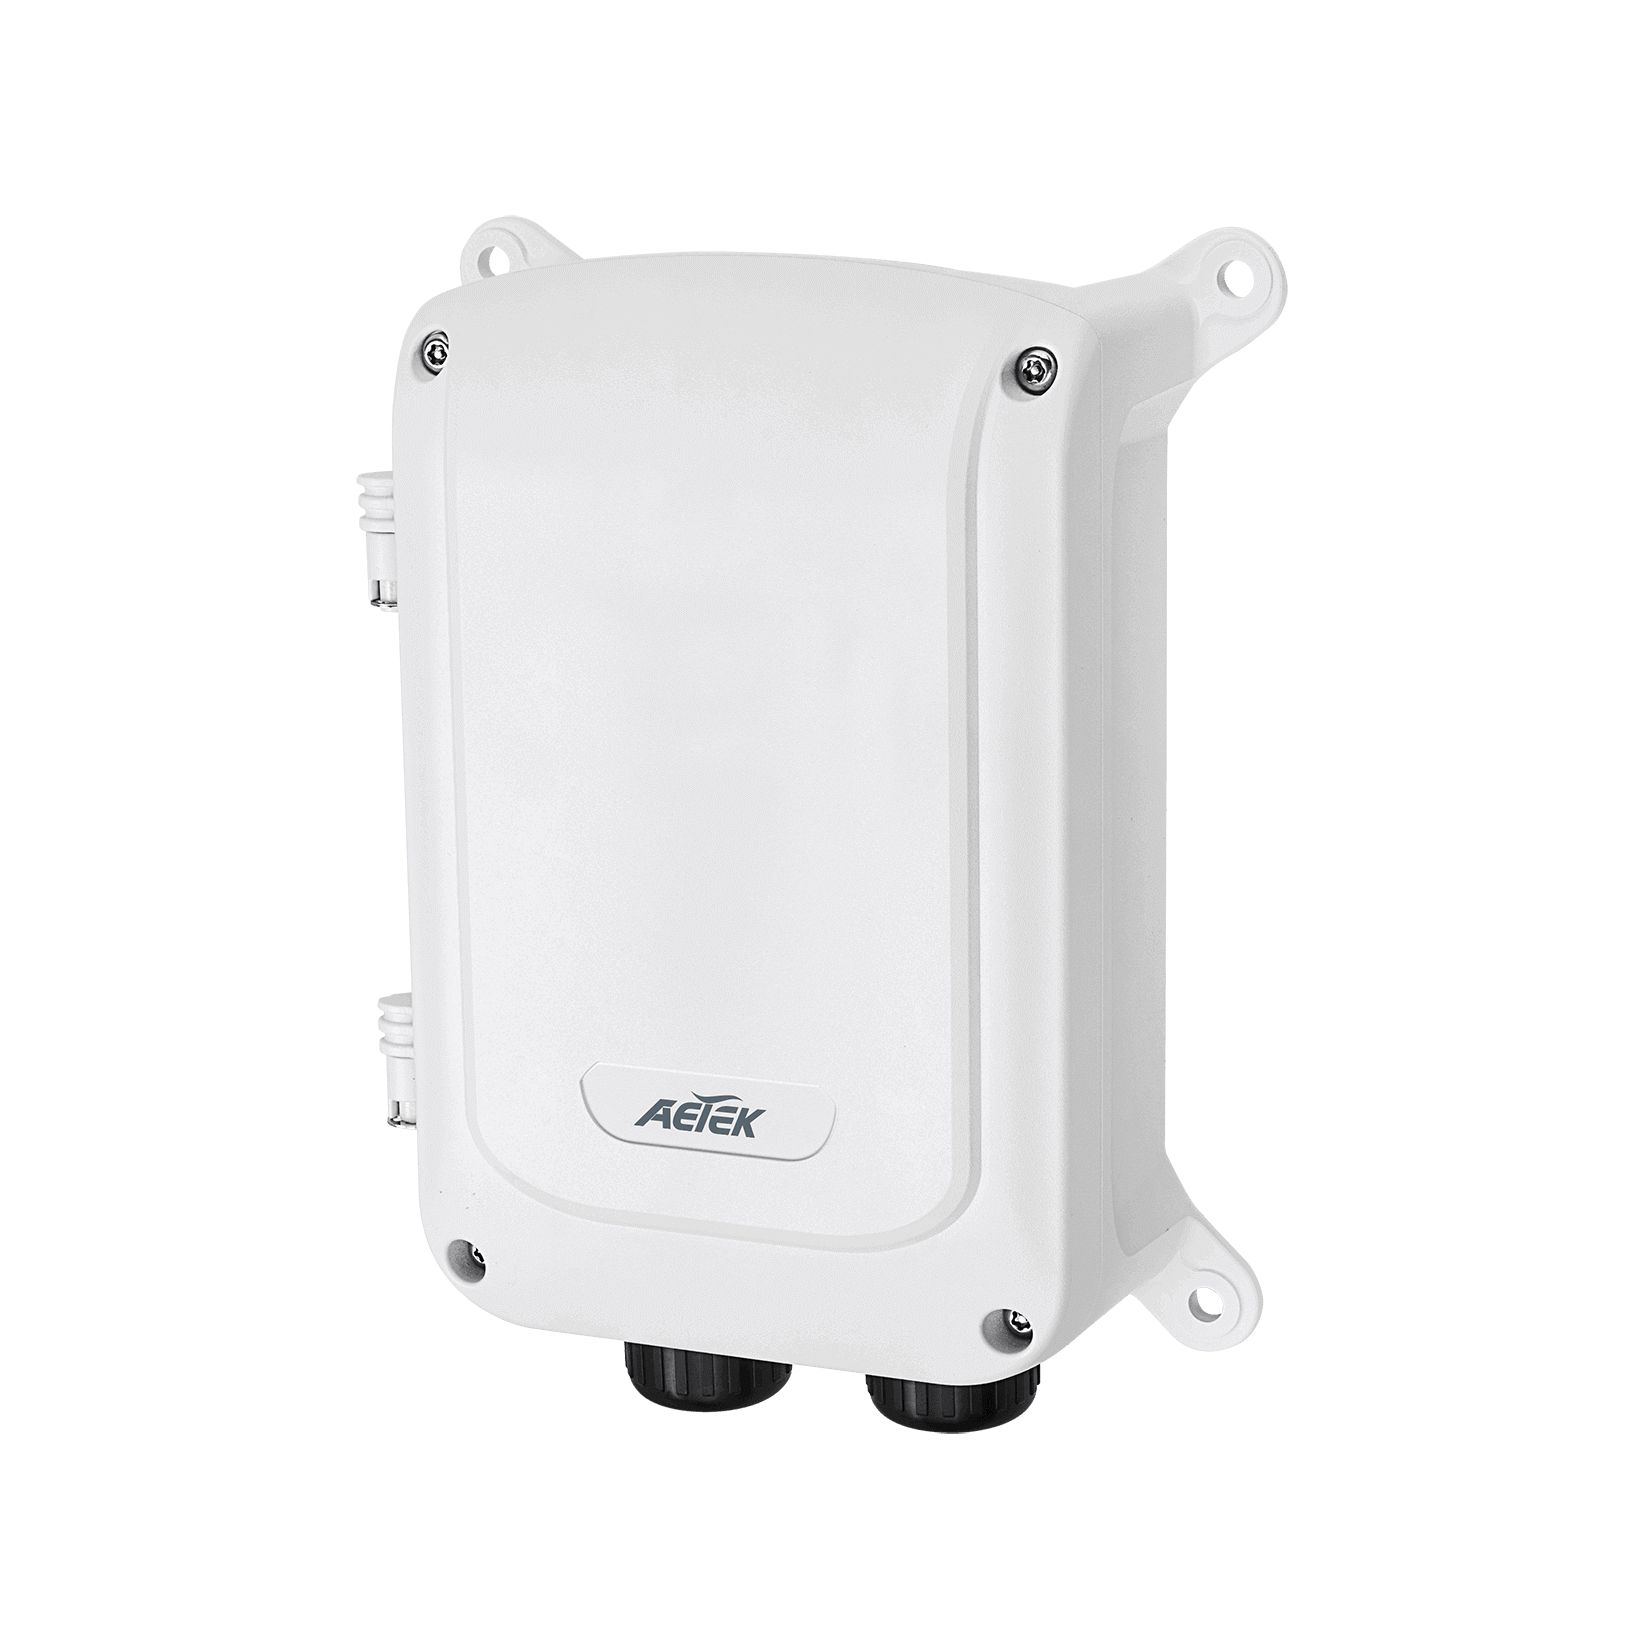 CSD | *SpOrd* Aetek Outdoor Power Box to suit Camera Housing, 24VAC